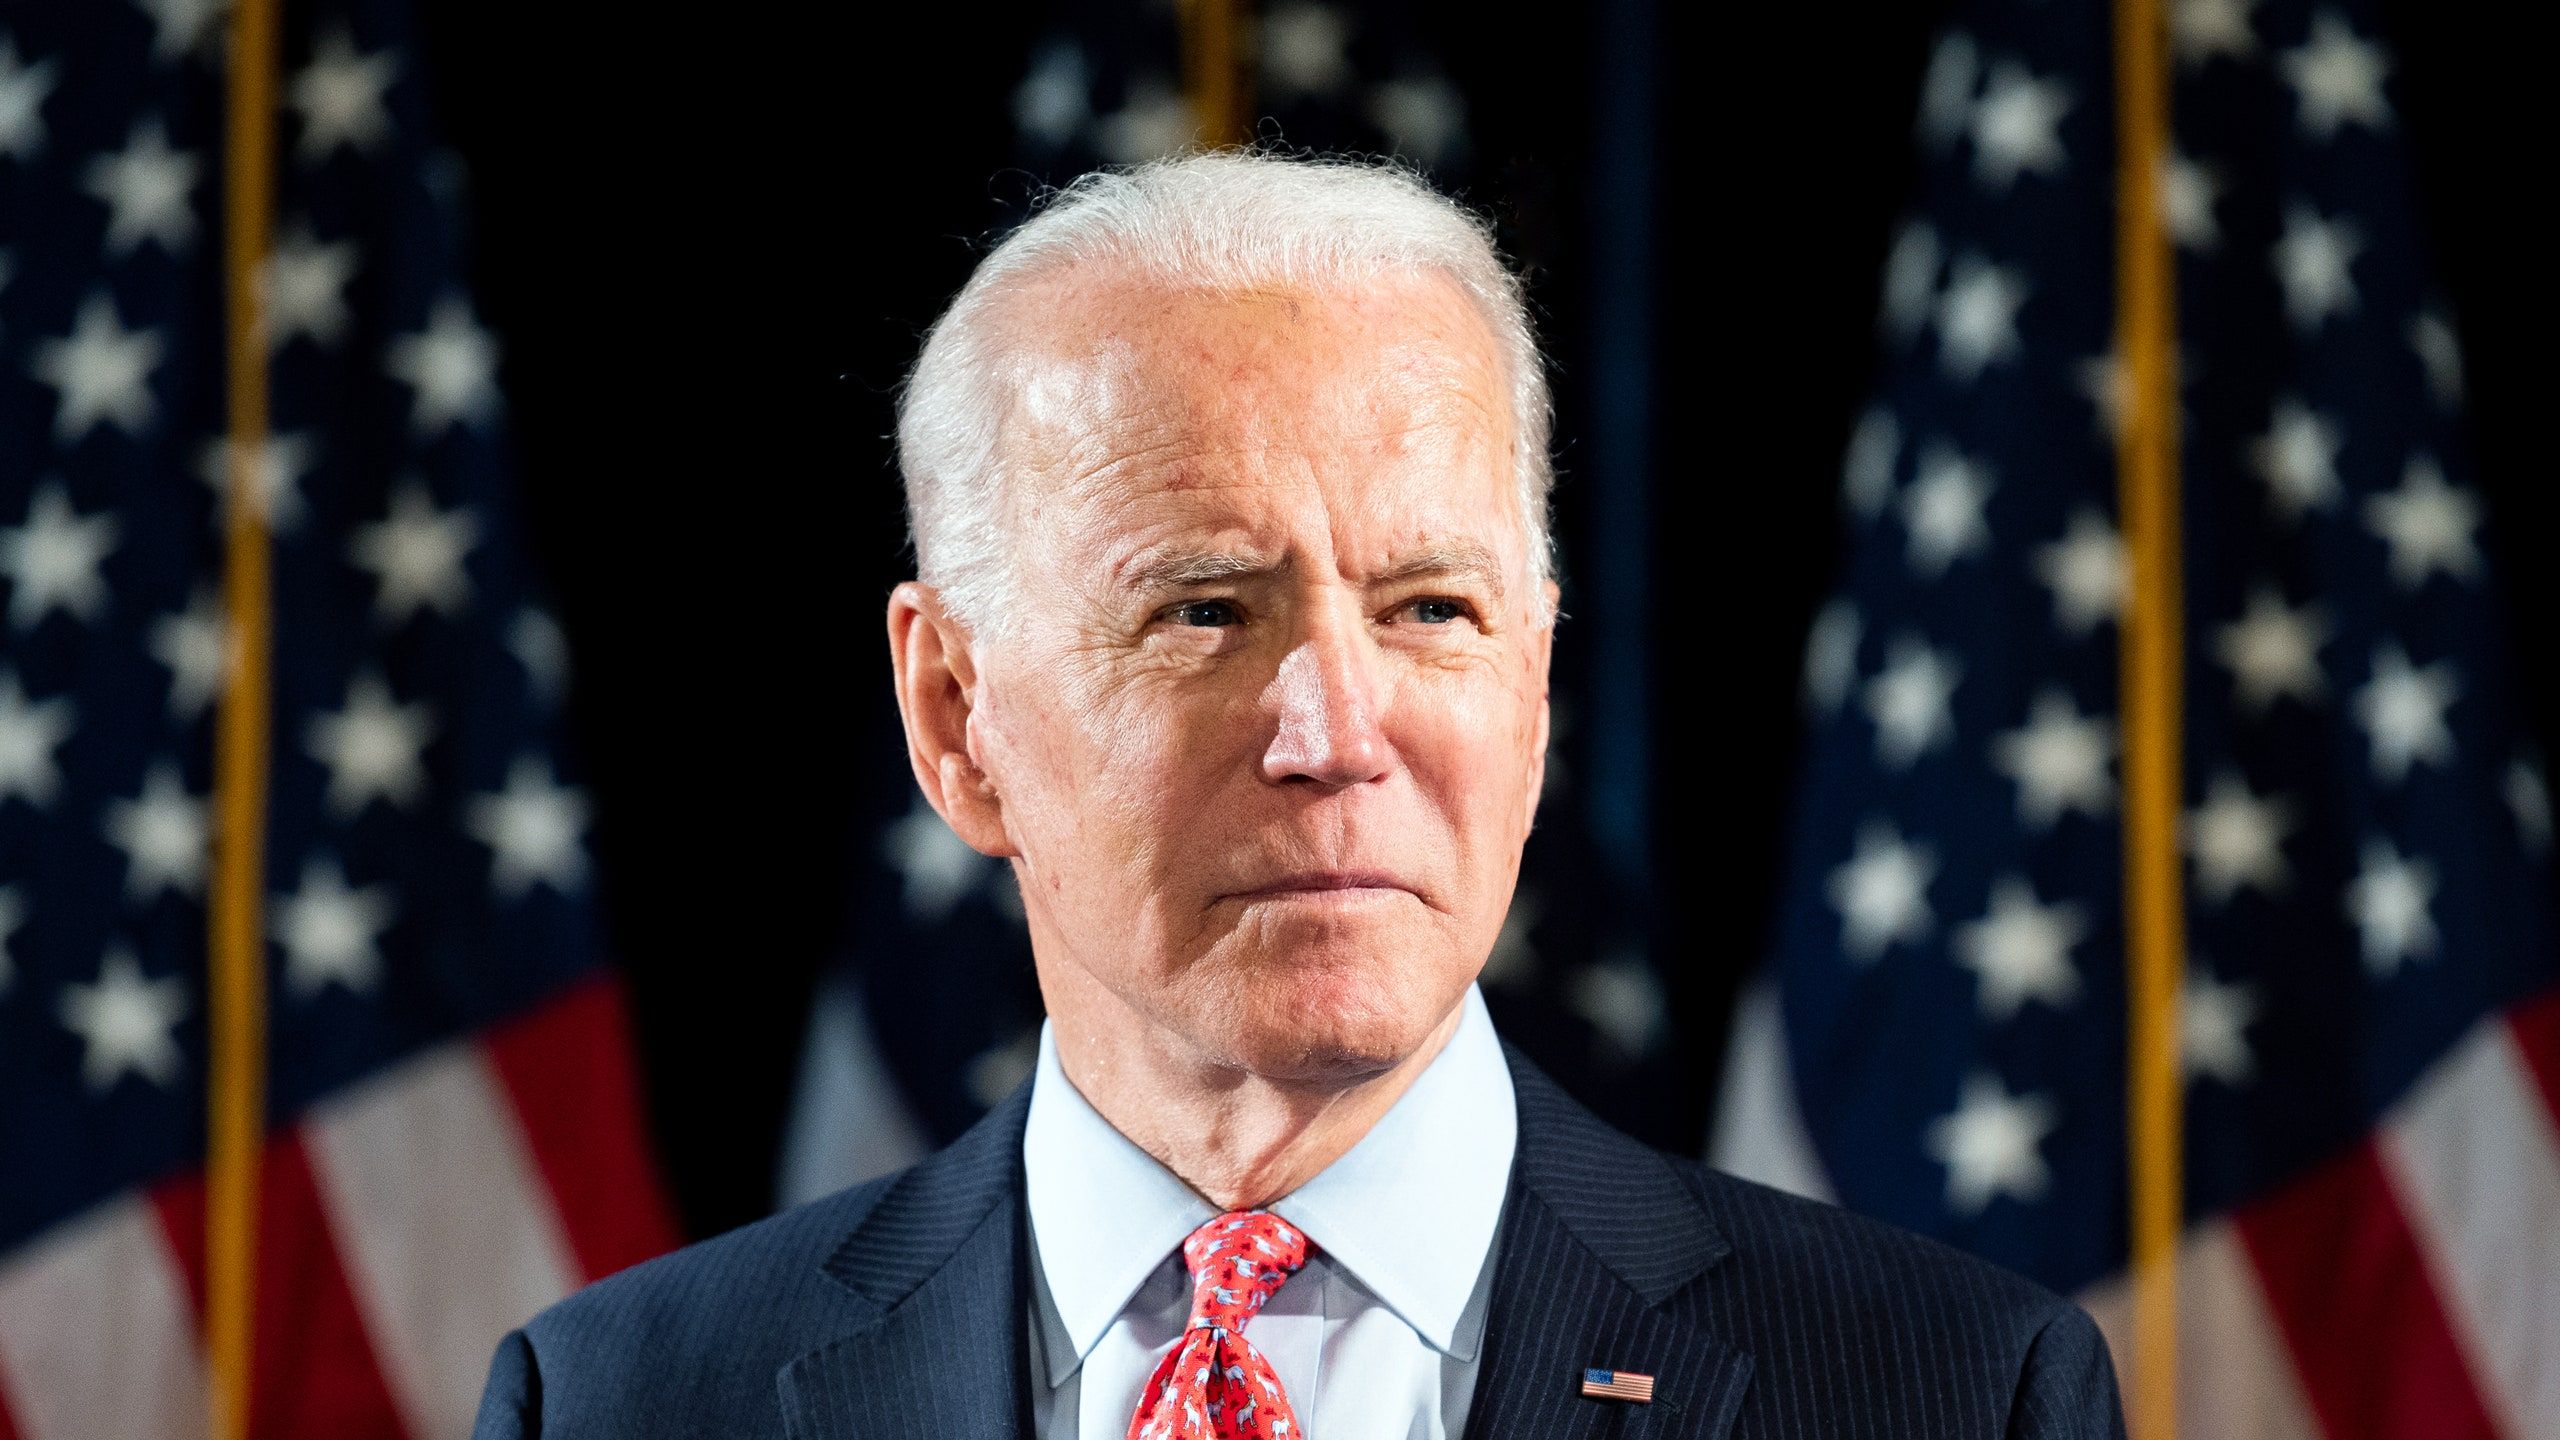 Joe Biden, Tara Reade, And The Democrats' Unasked For Dilemma